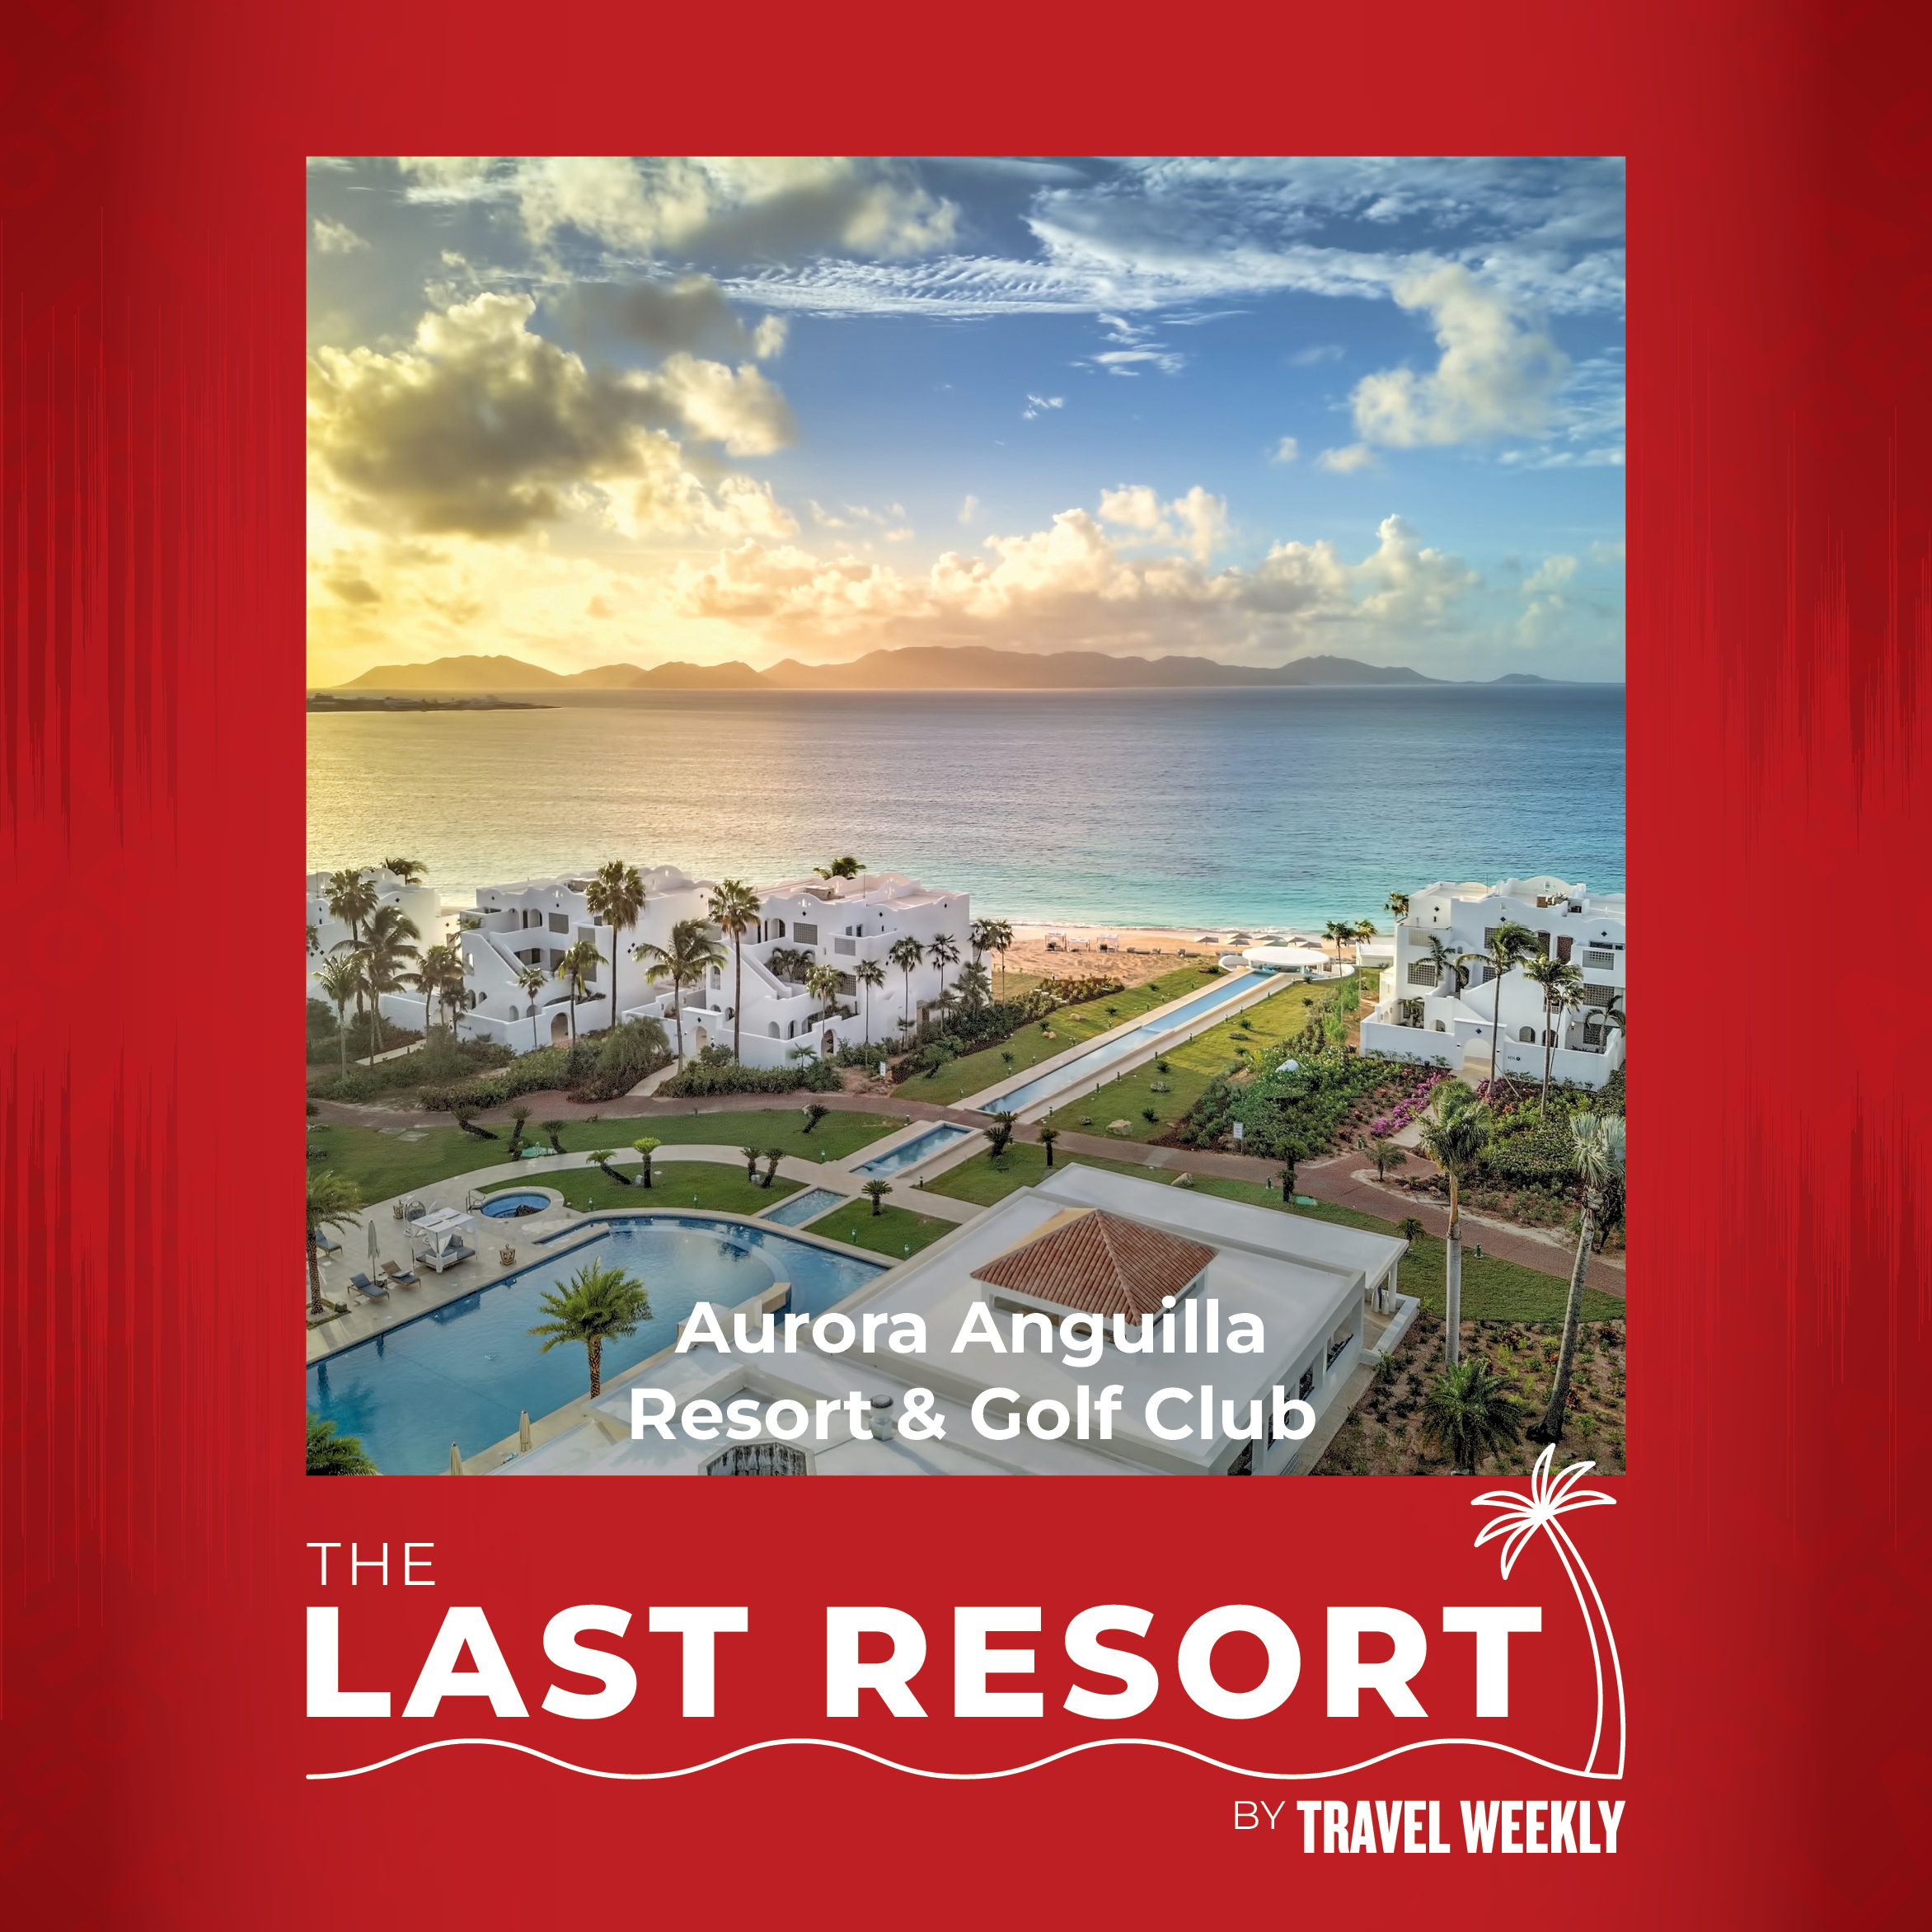 The Last Resort: Aurora Anguilla Resort and Golf Club